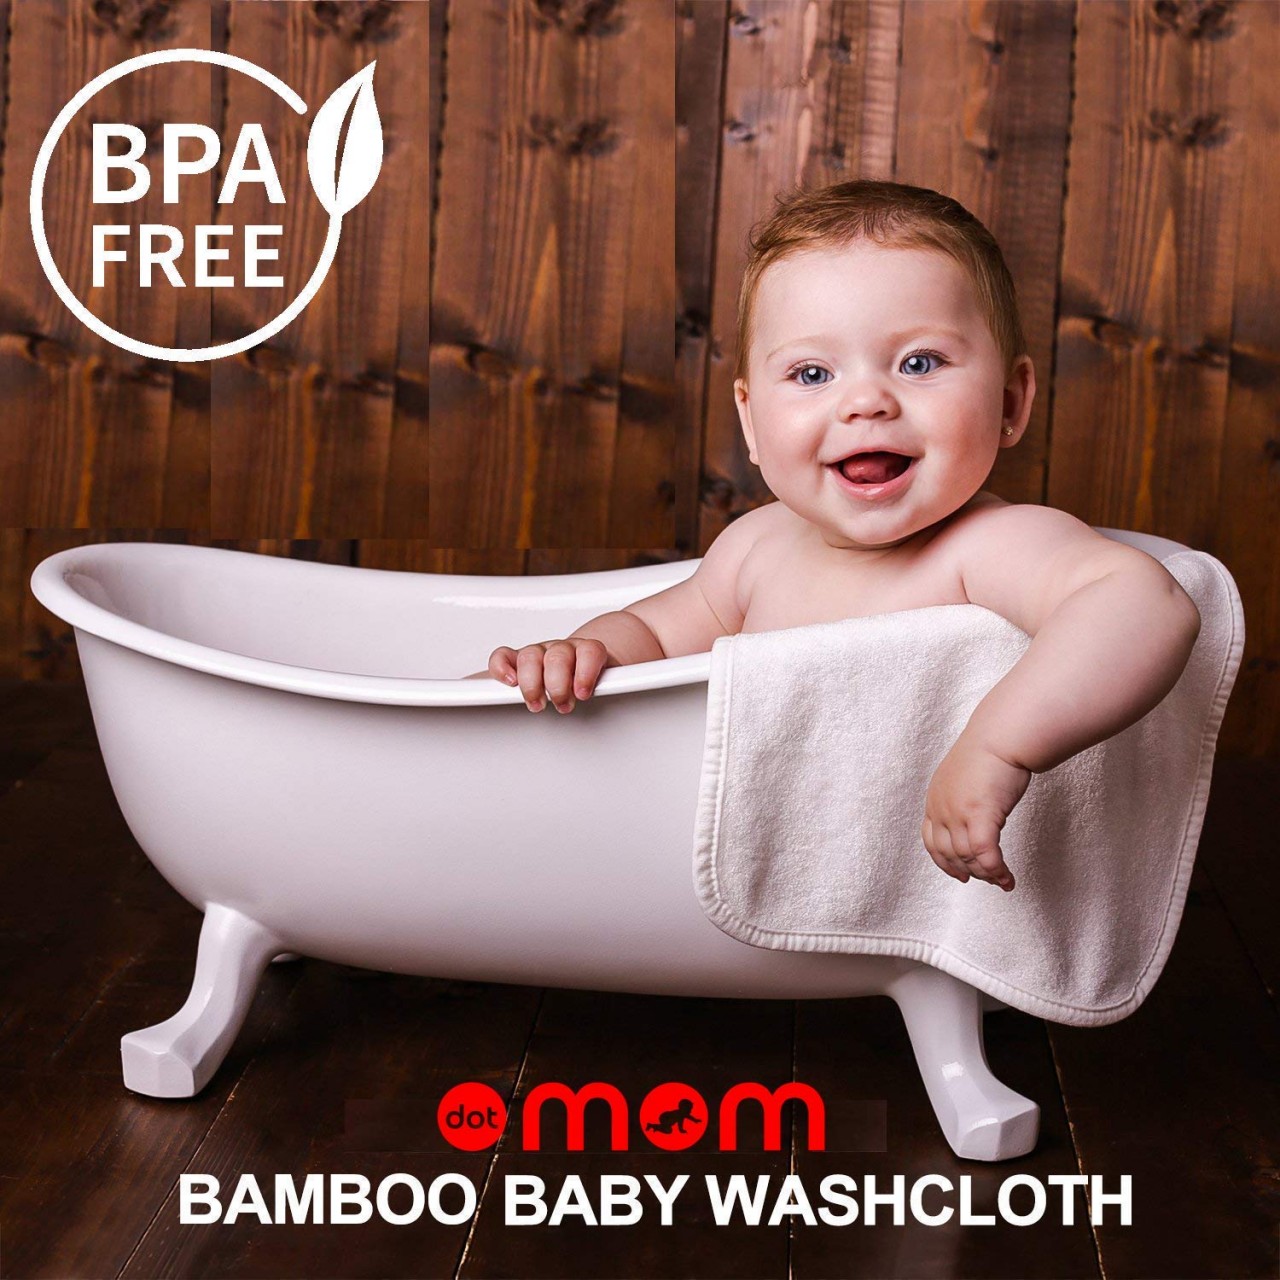 Organic Bamboo Washcloth/Face Towel (Set of 6)